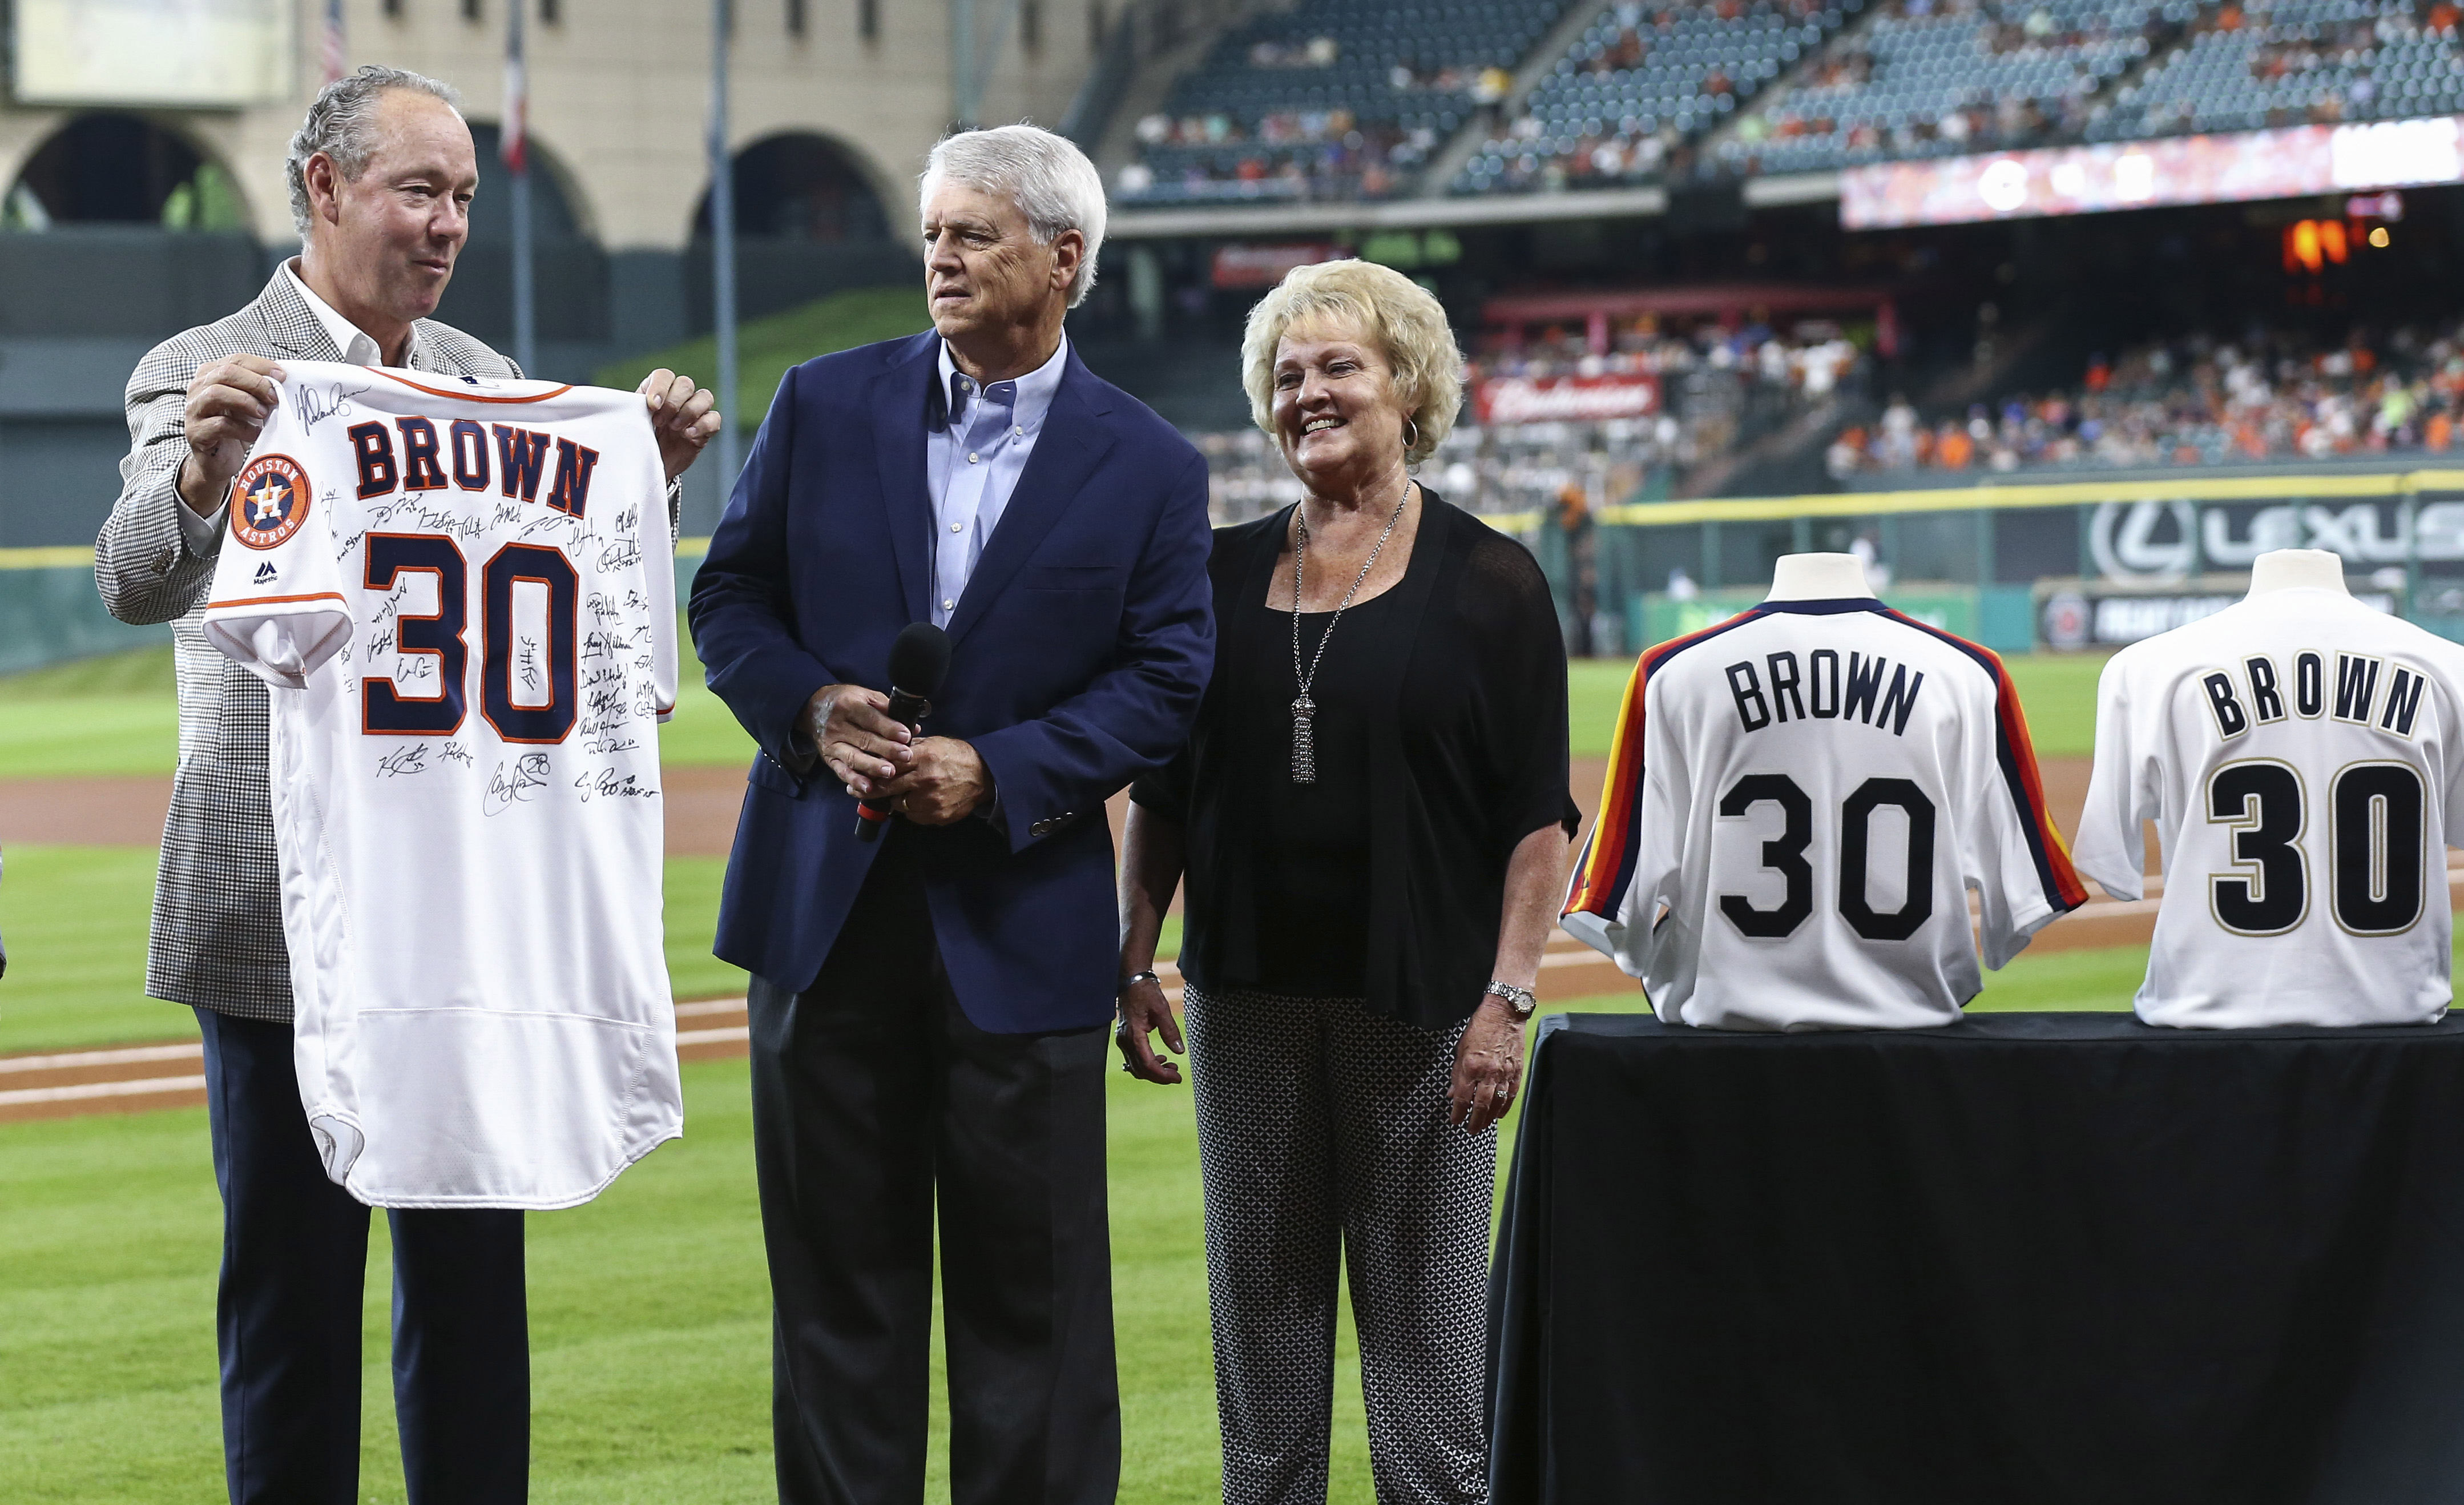 Longtime Astros broadcaster Bill Brown announces retirement